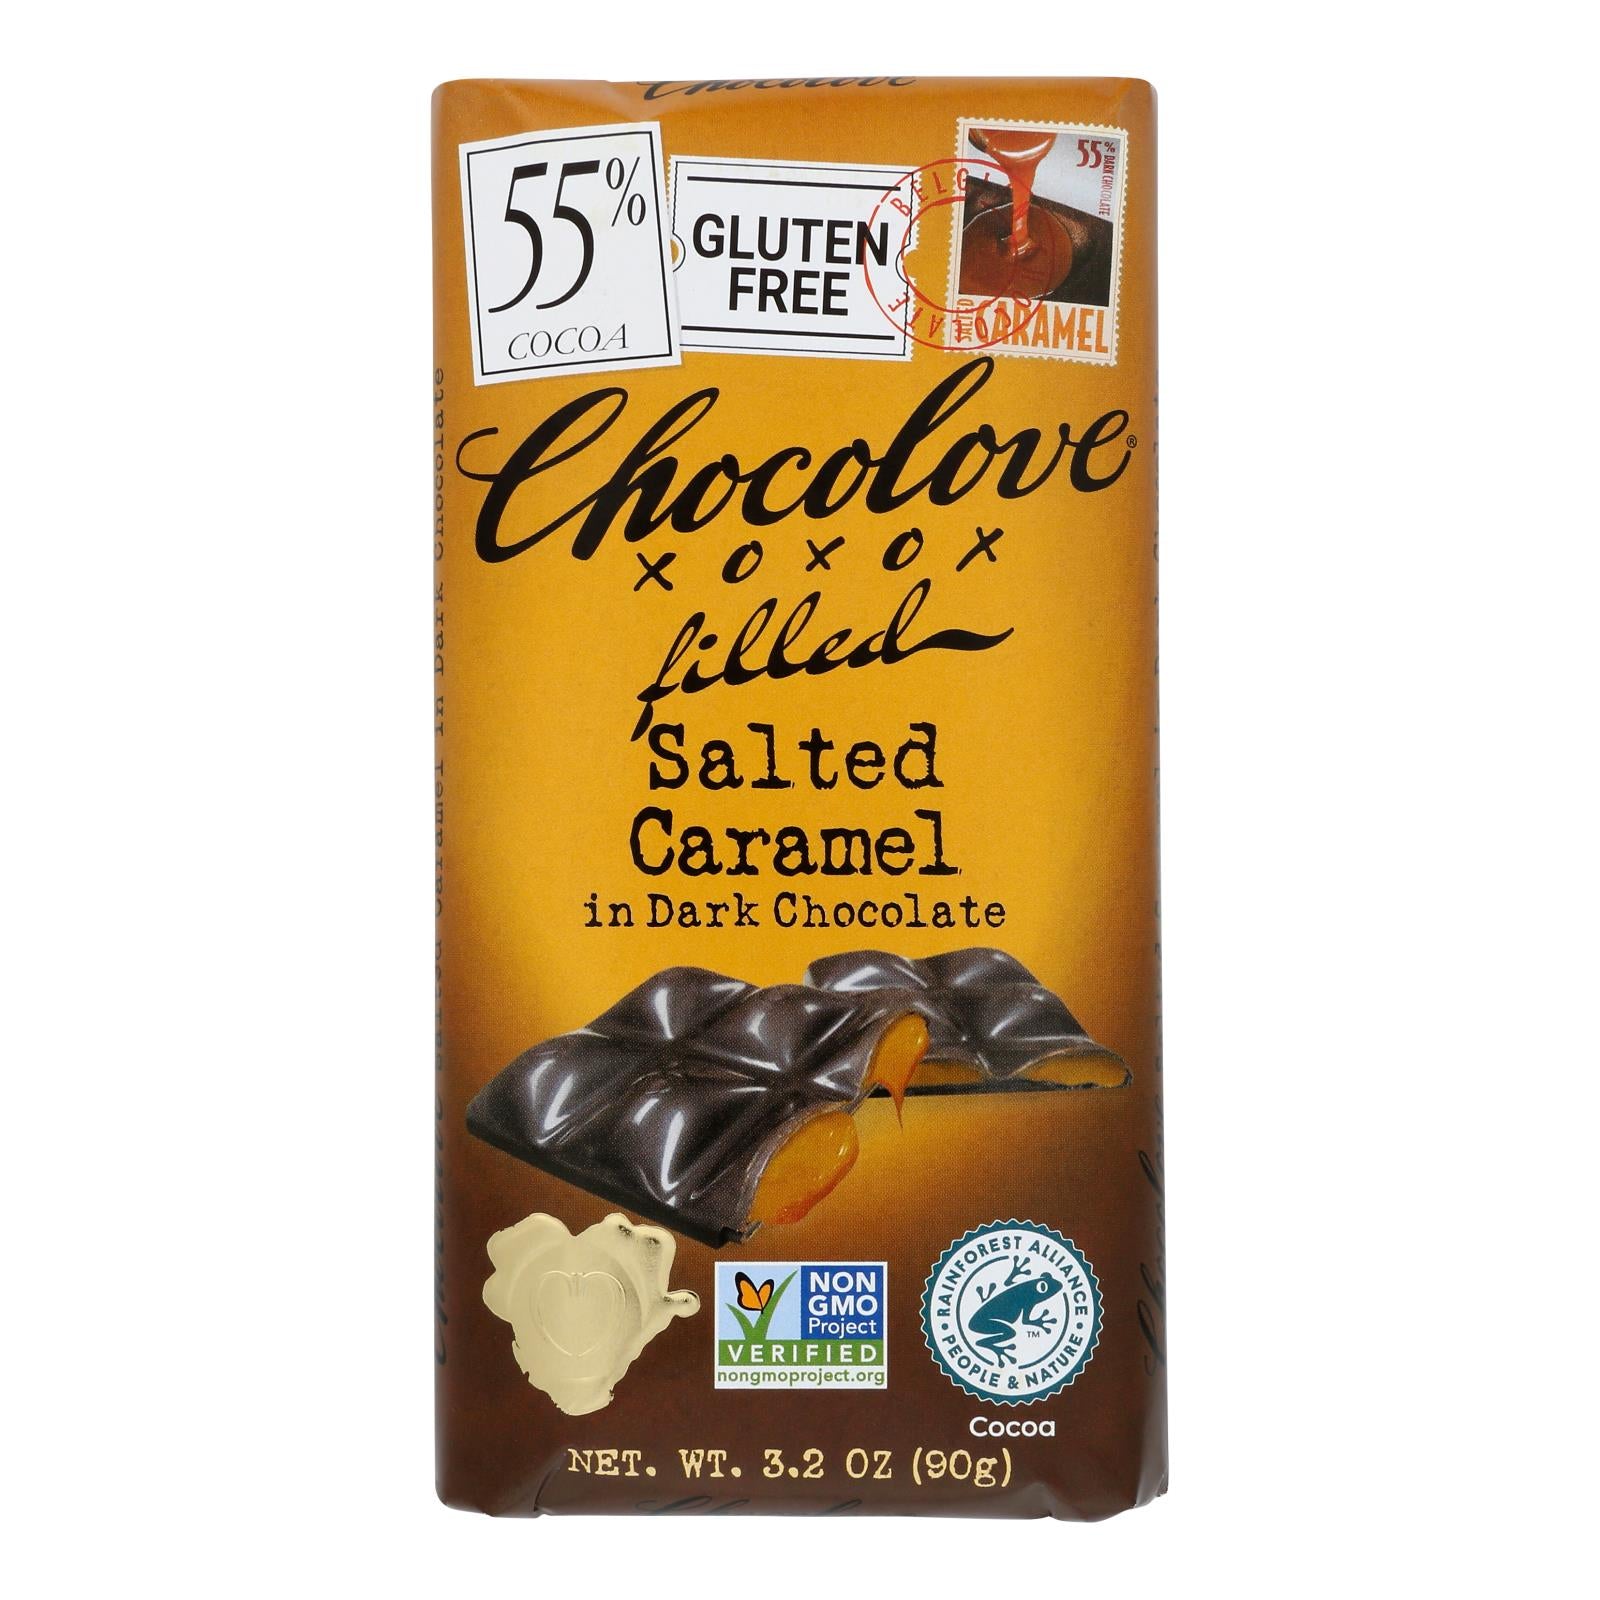 Chocolove Xoxox - Dark Chocolate Bar - Salted Caramel - Case of 10 - 3.2 oz